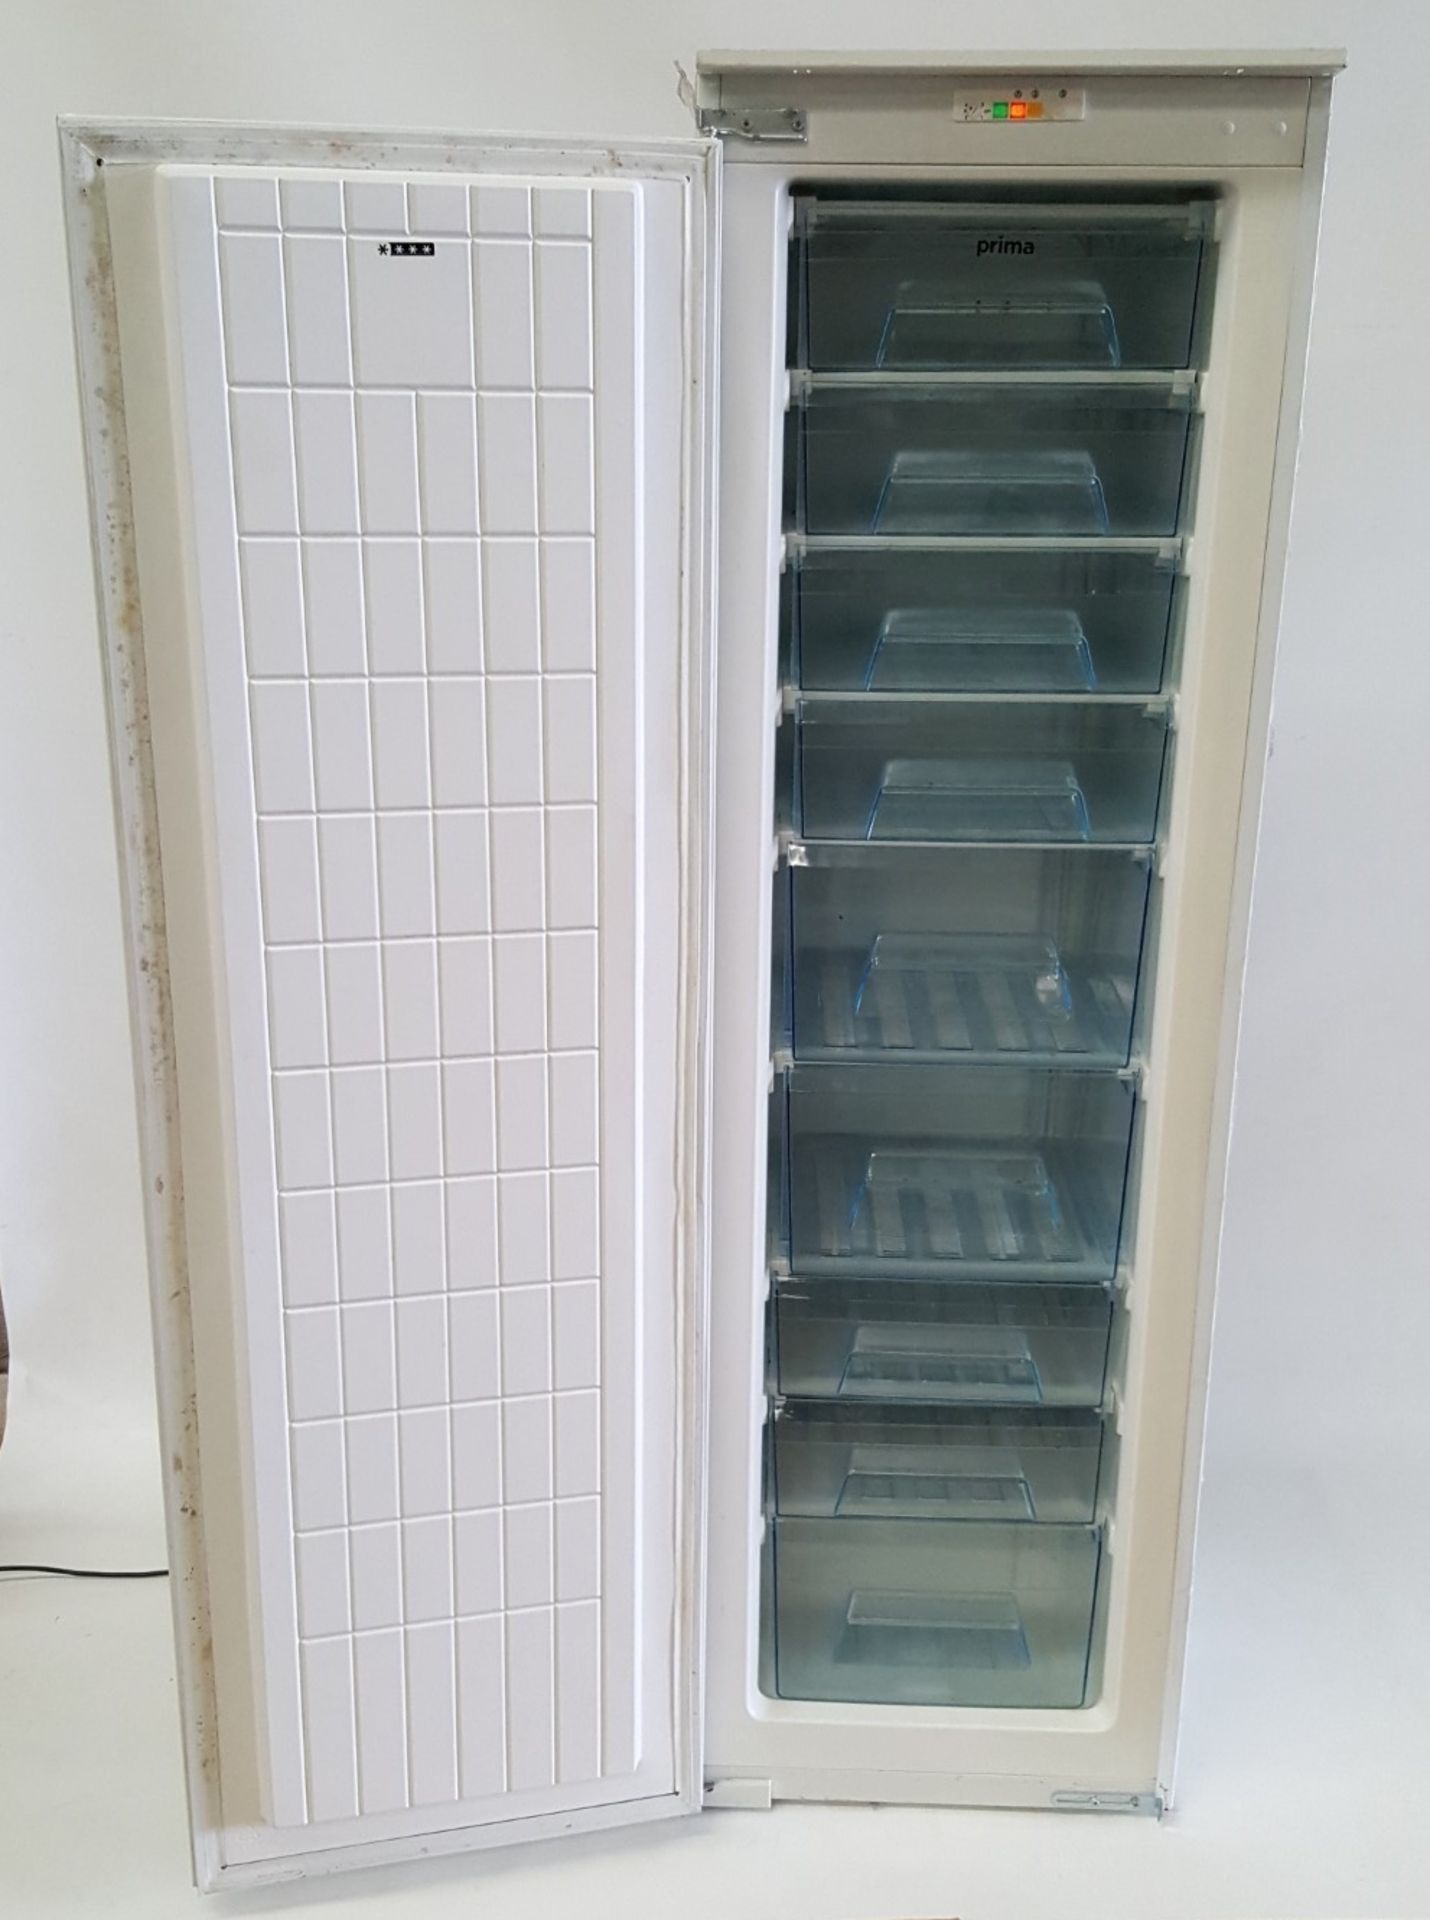 1 x Prima Integrated Larder Freezer - PRRF209 - Ref BY151 - Image 3 of 7